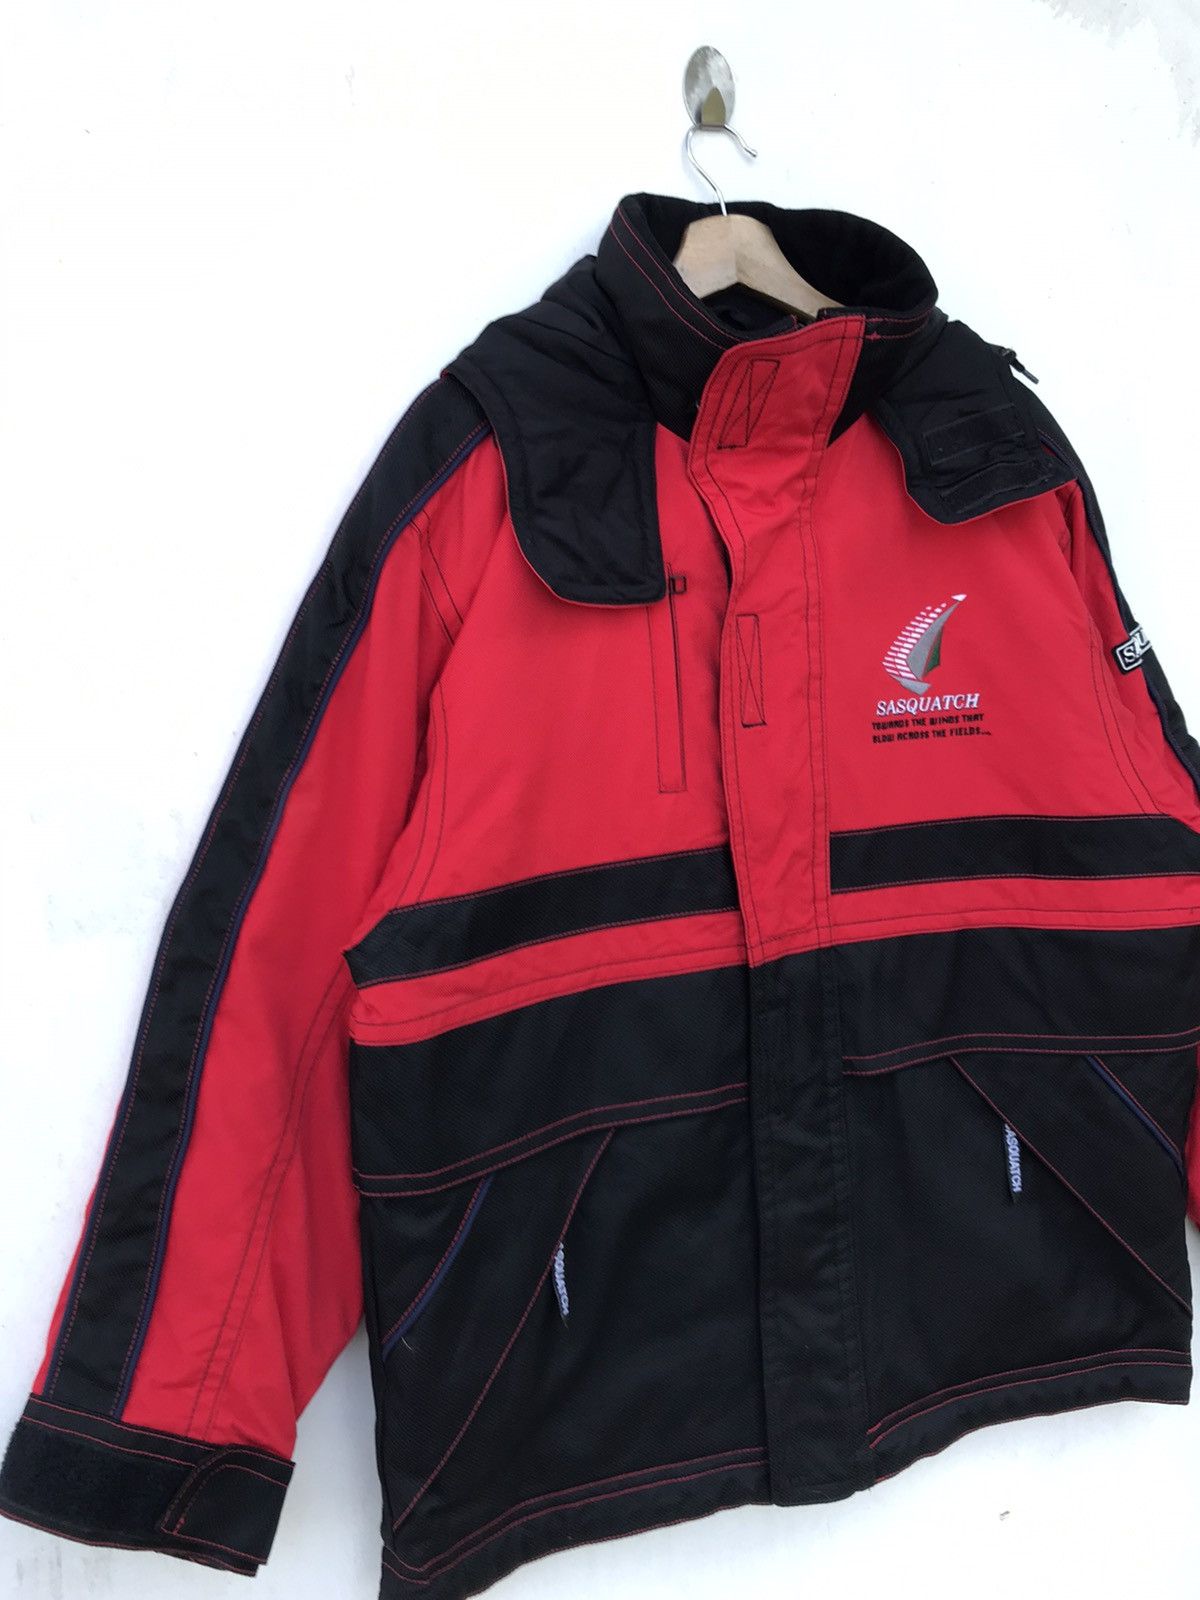 Sasquatch Ski One Set Jacket With Pants - 5